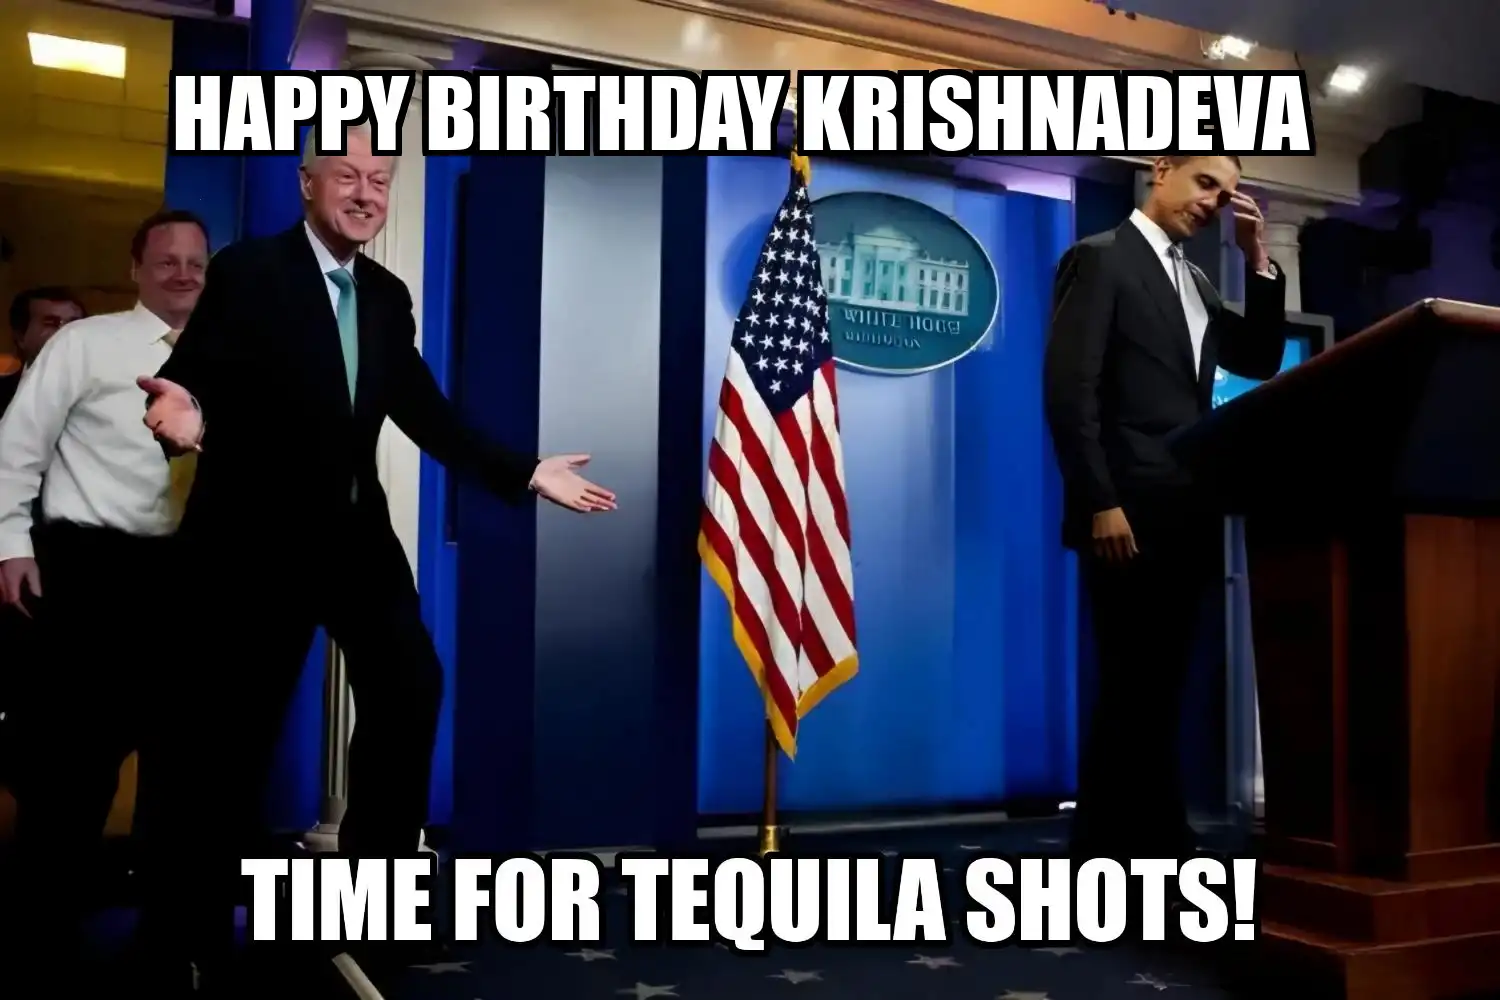 Happy Birthday Krishnadeva Time For Tequila Shots Memes